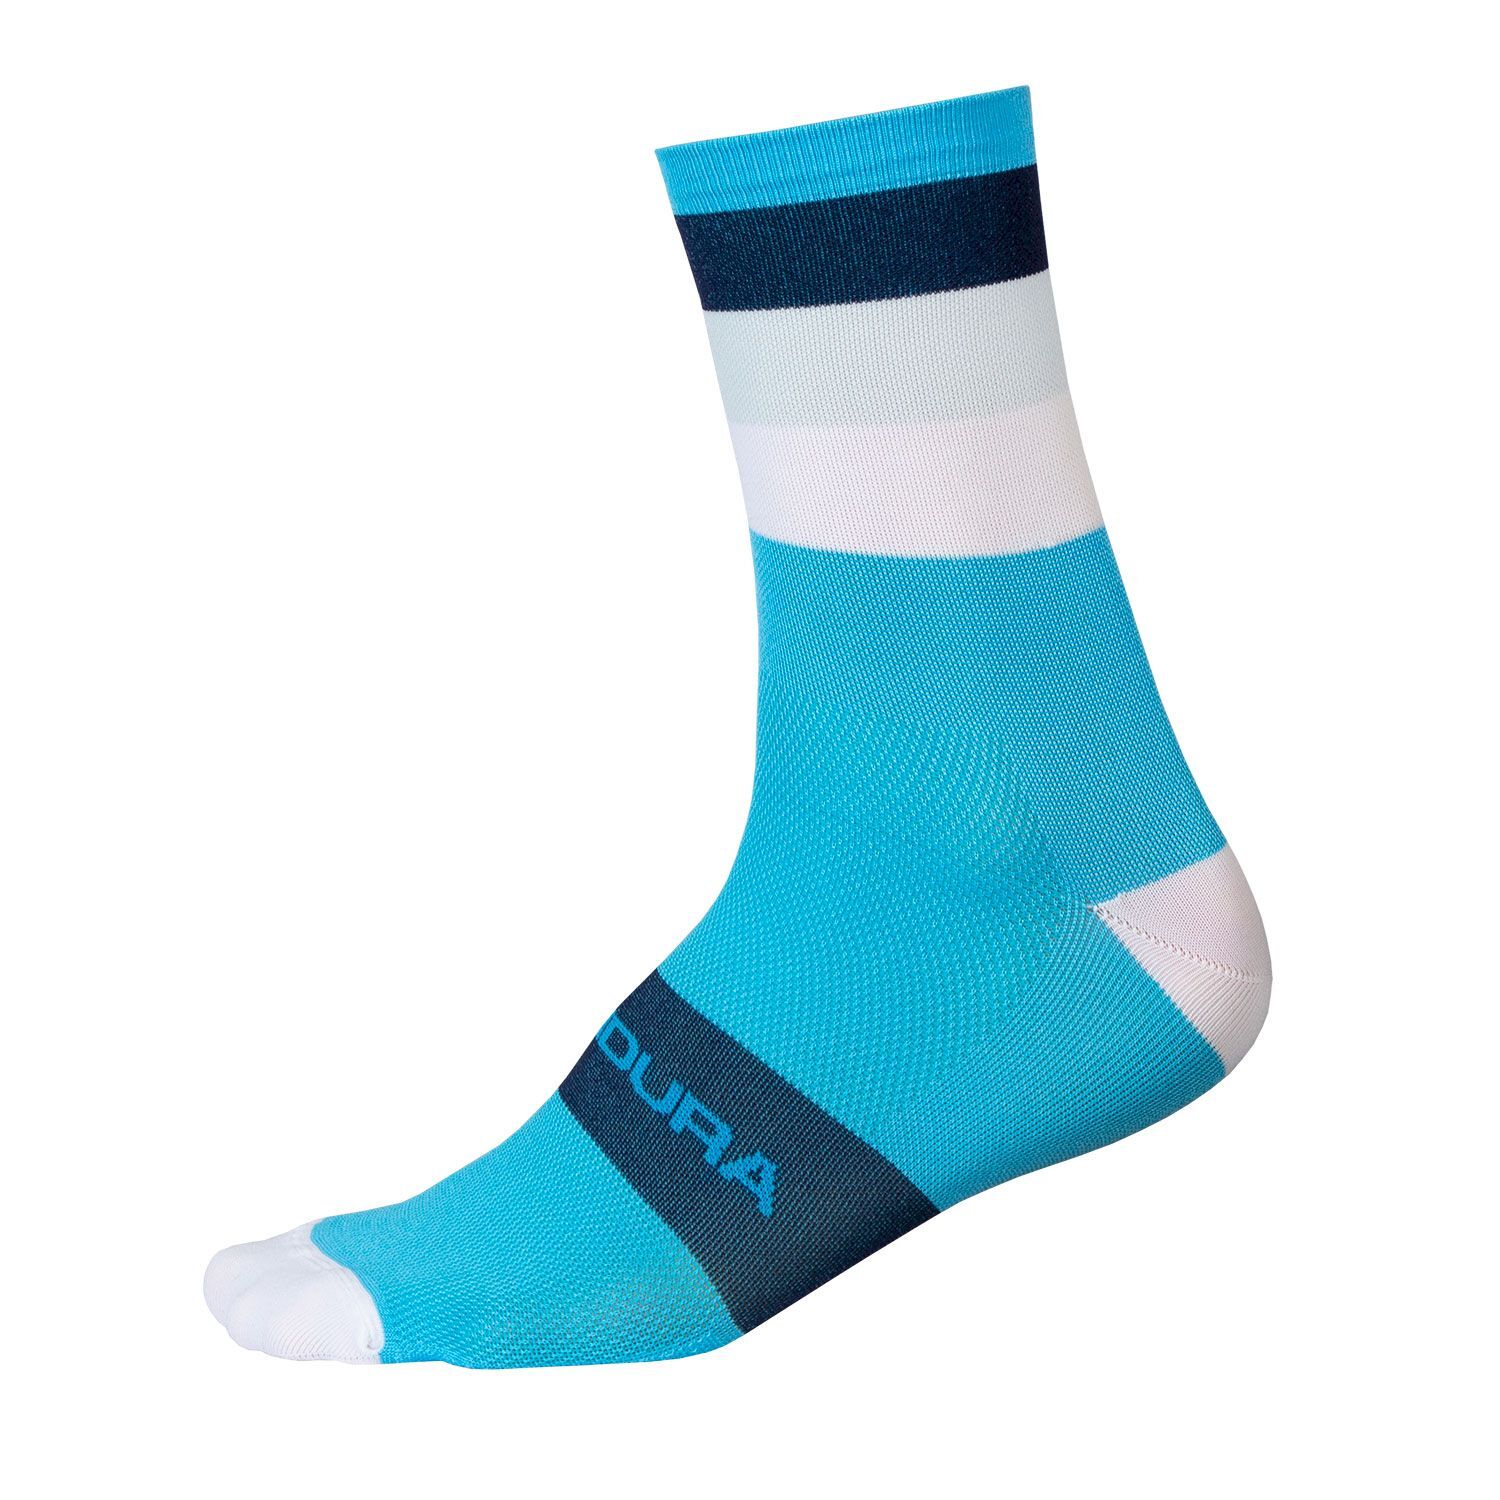 Endura Bandwidth Sock - Cycling socks - Men's